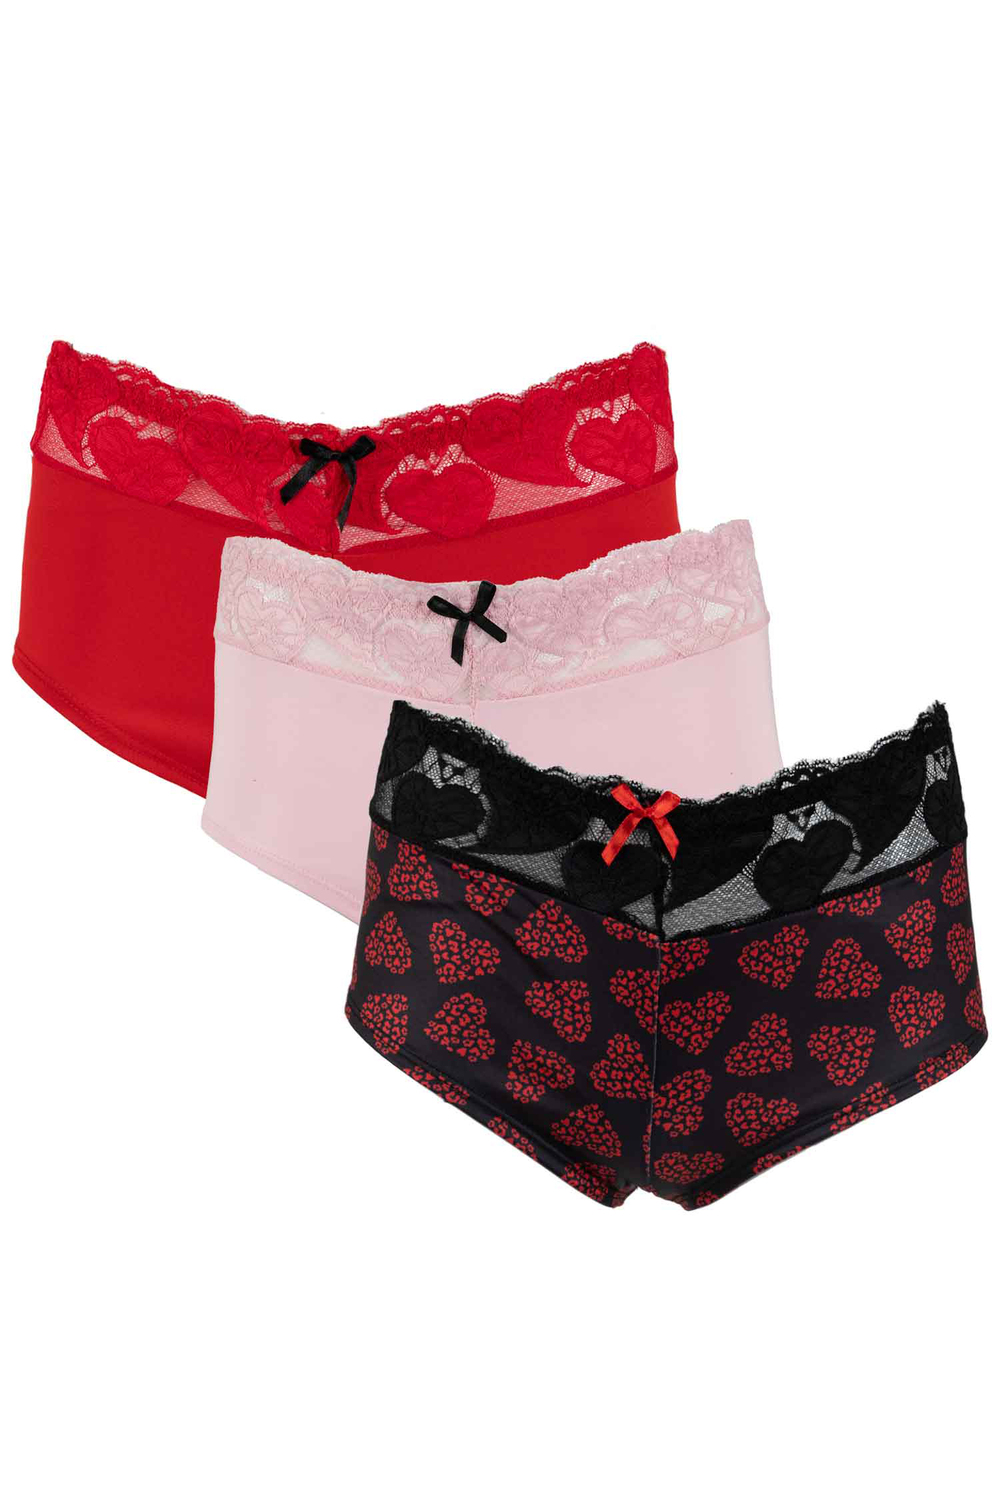 B2BODY Cotton Underwear Boyshort Panties for Women Small to Plus